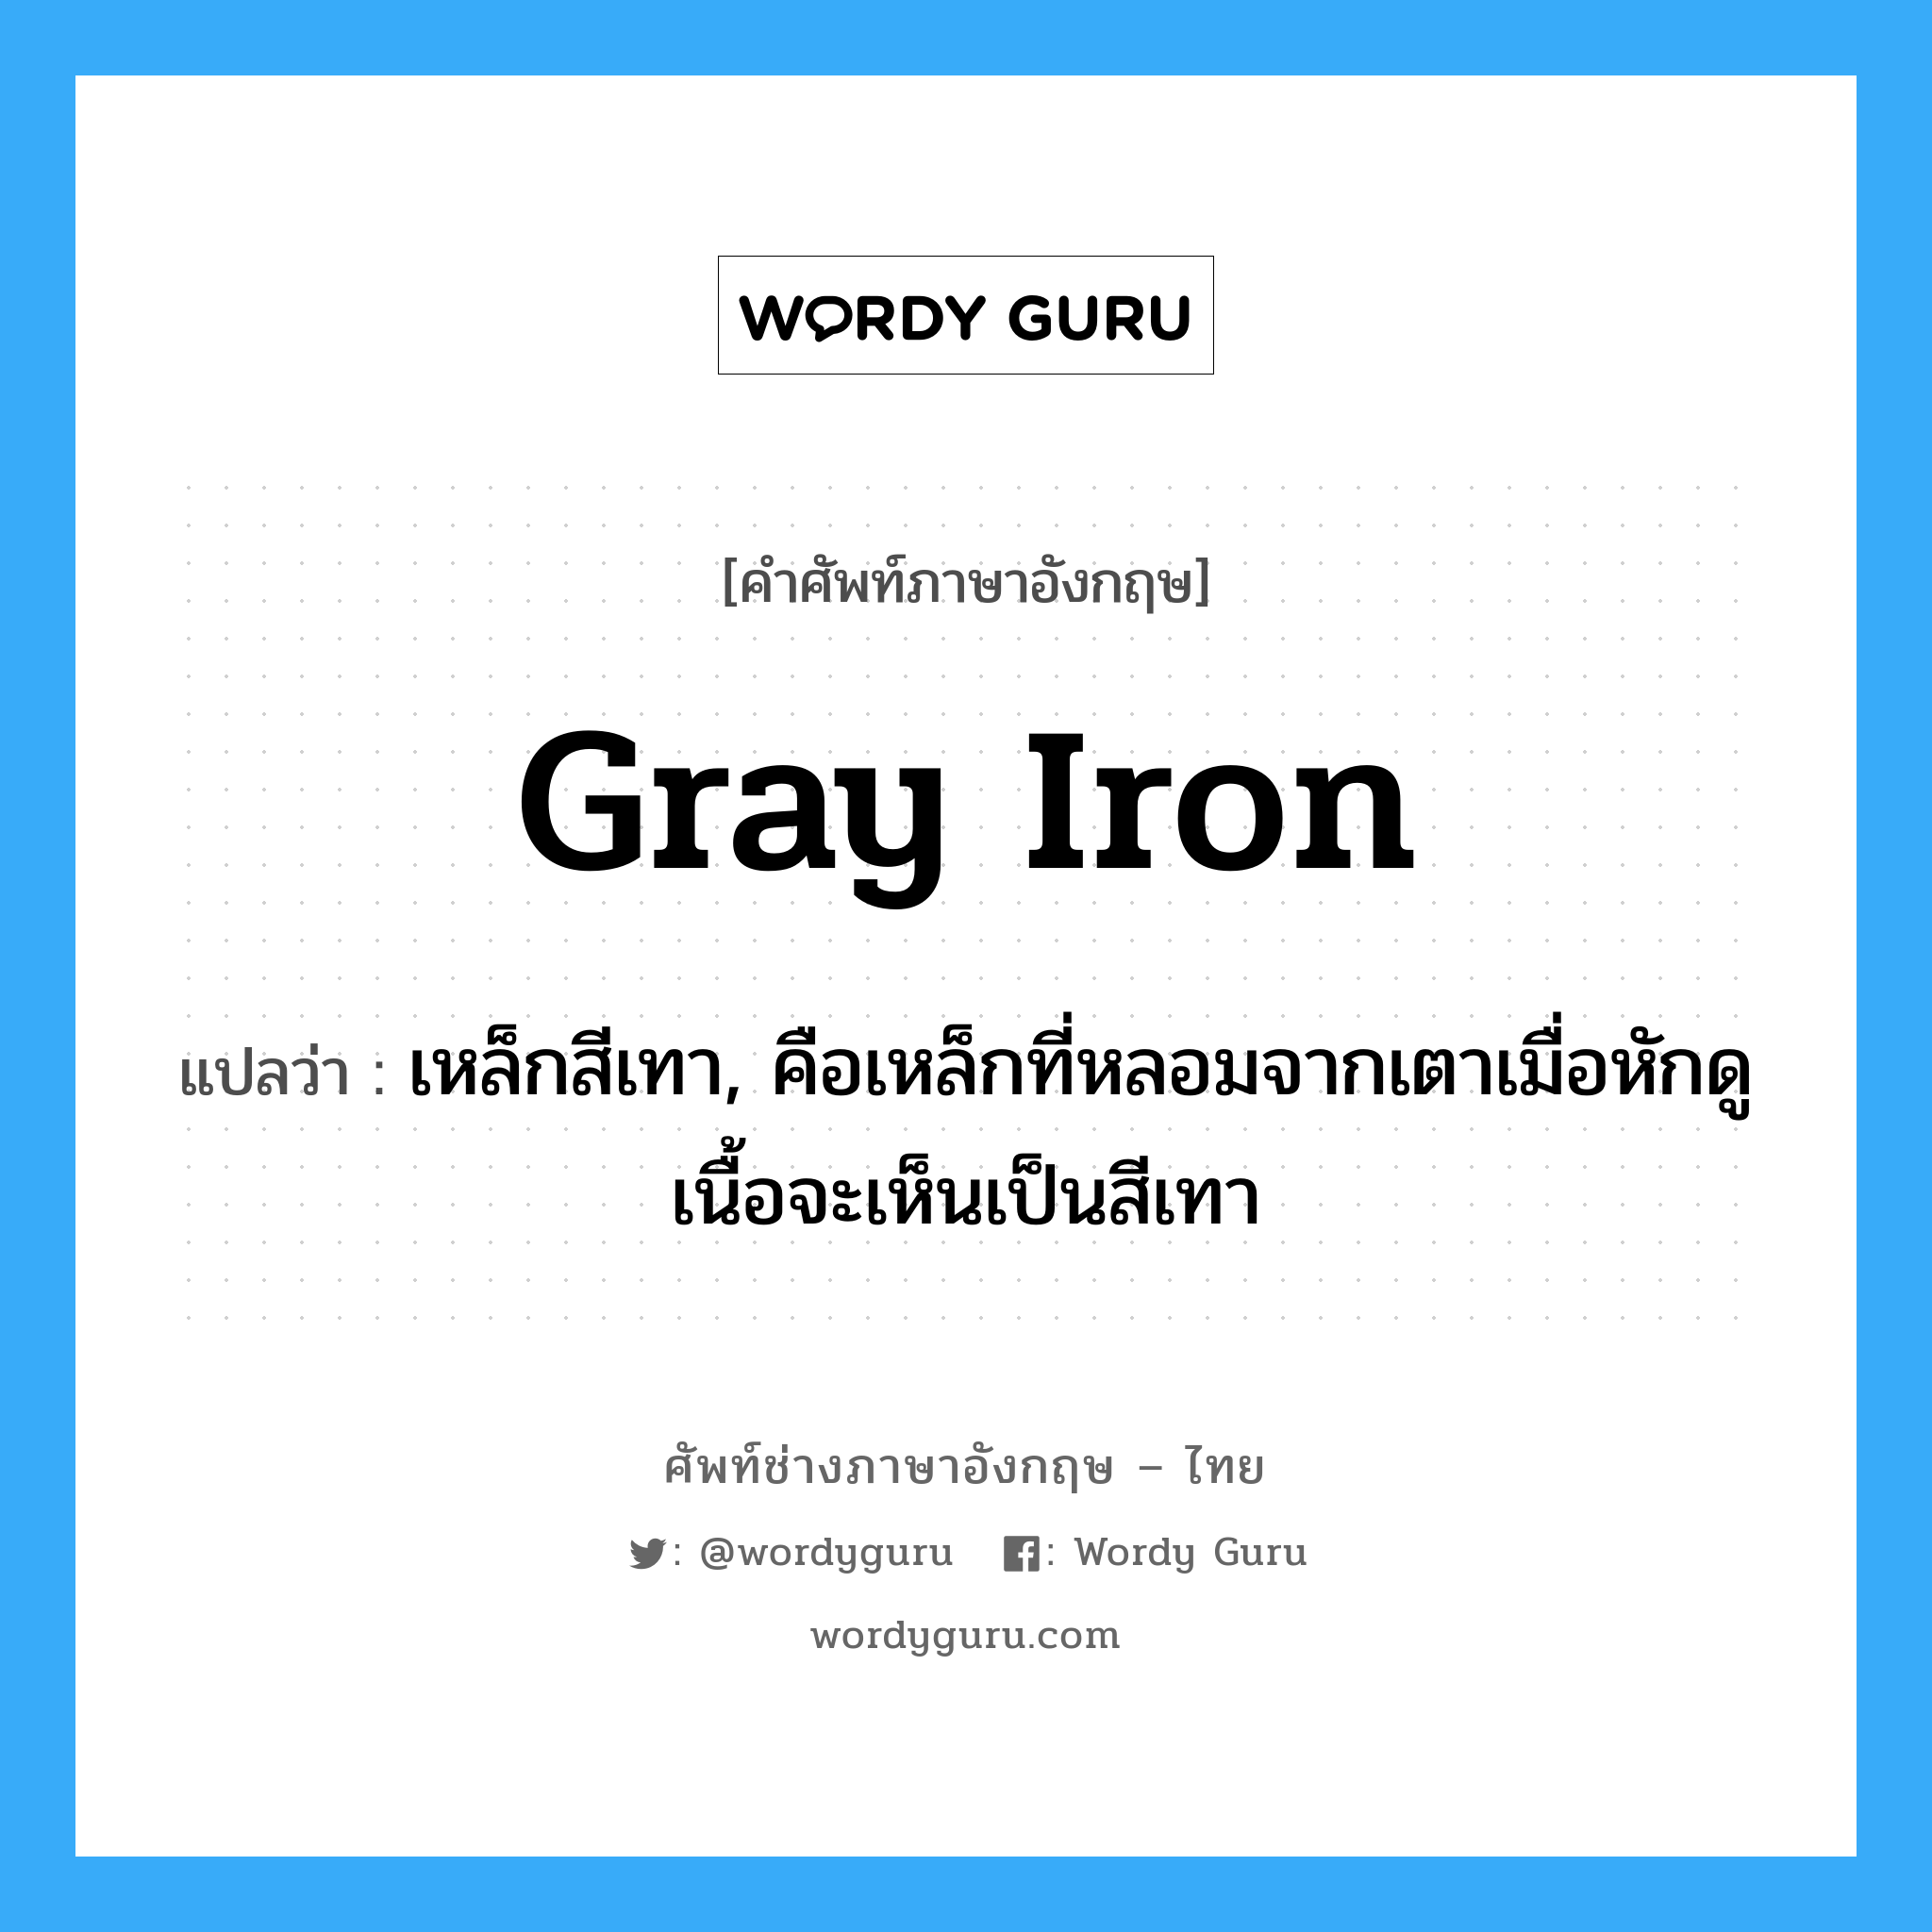 gray iron แปลว่า?, คำศัพท์ช่างภาษาอังกฤษ - ไทย gray iron คำศัพท์ภาษาอังกฤษ gray iron แปลว่า เหล็กสีเทา, คือเหล็กที่หลอมจากเตาเมื่อหักดูเนื้อจะเห็นเป็นสีเทา